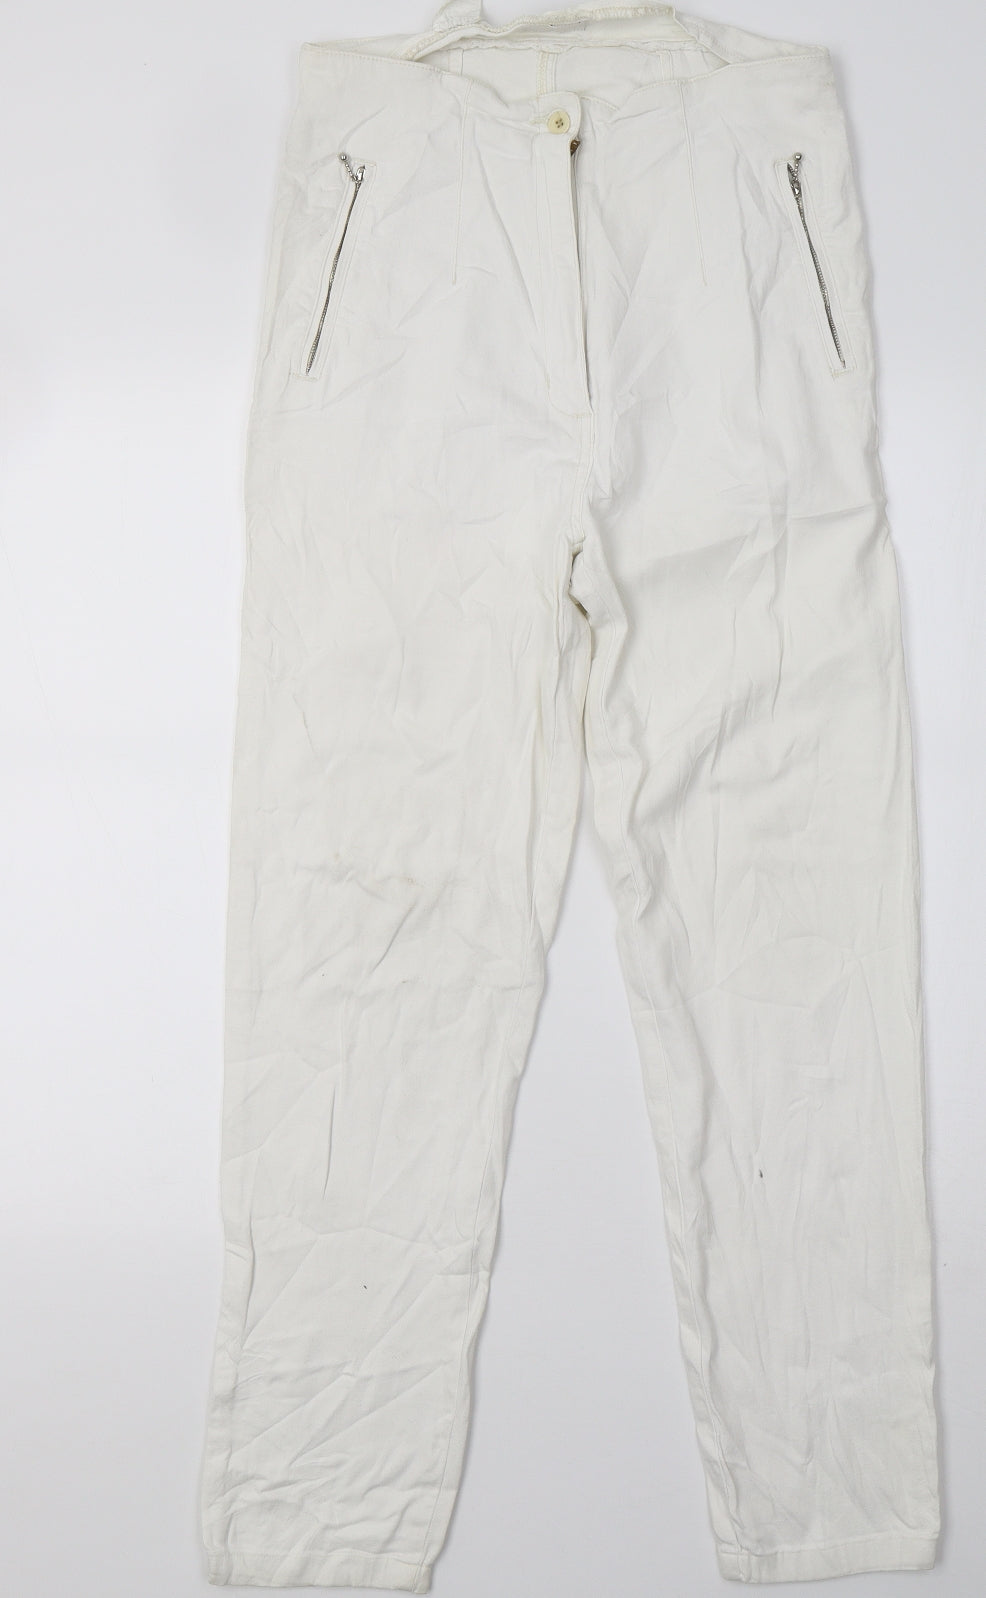 Stooker Womens White  Denim Skinny Jeans Size 8 L30 in